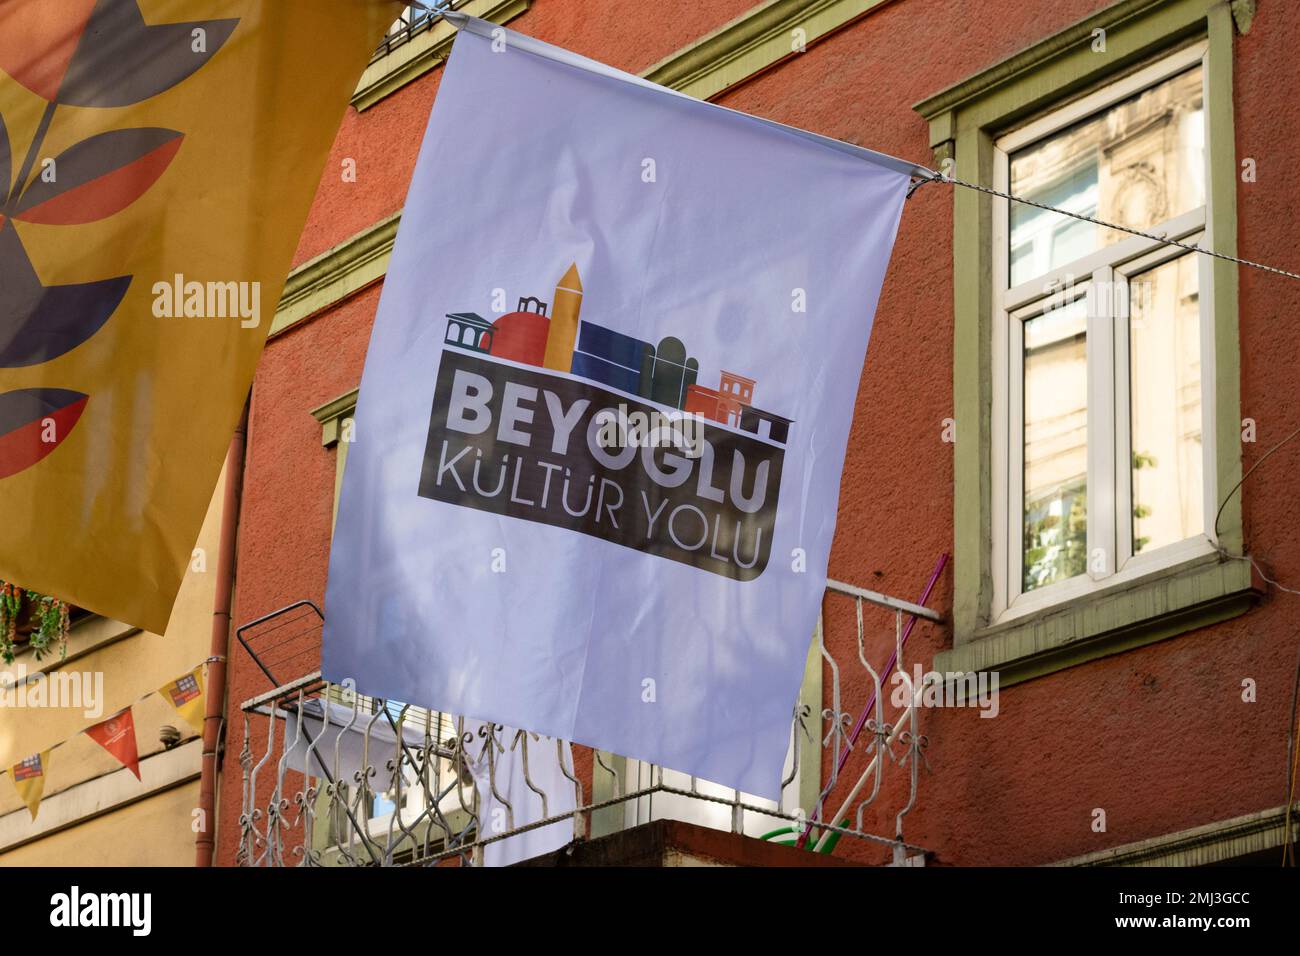 Beyoglu Culture Route Festival - Beyoglu art, culture and entertainment festival, Istanbul, Turkey Stock Photo